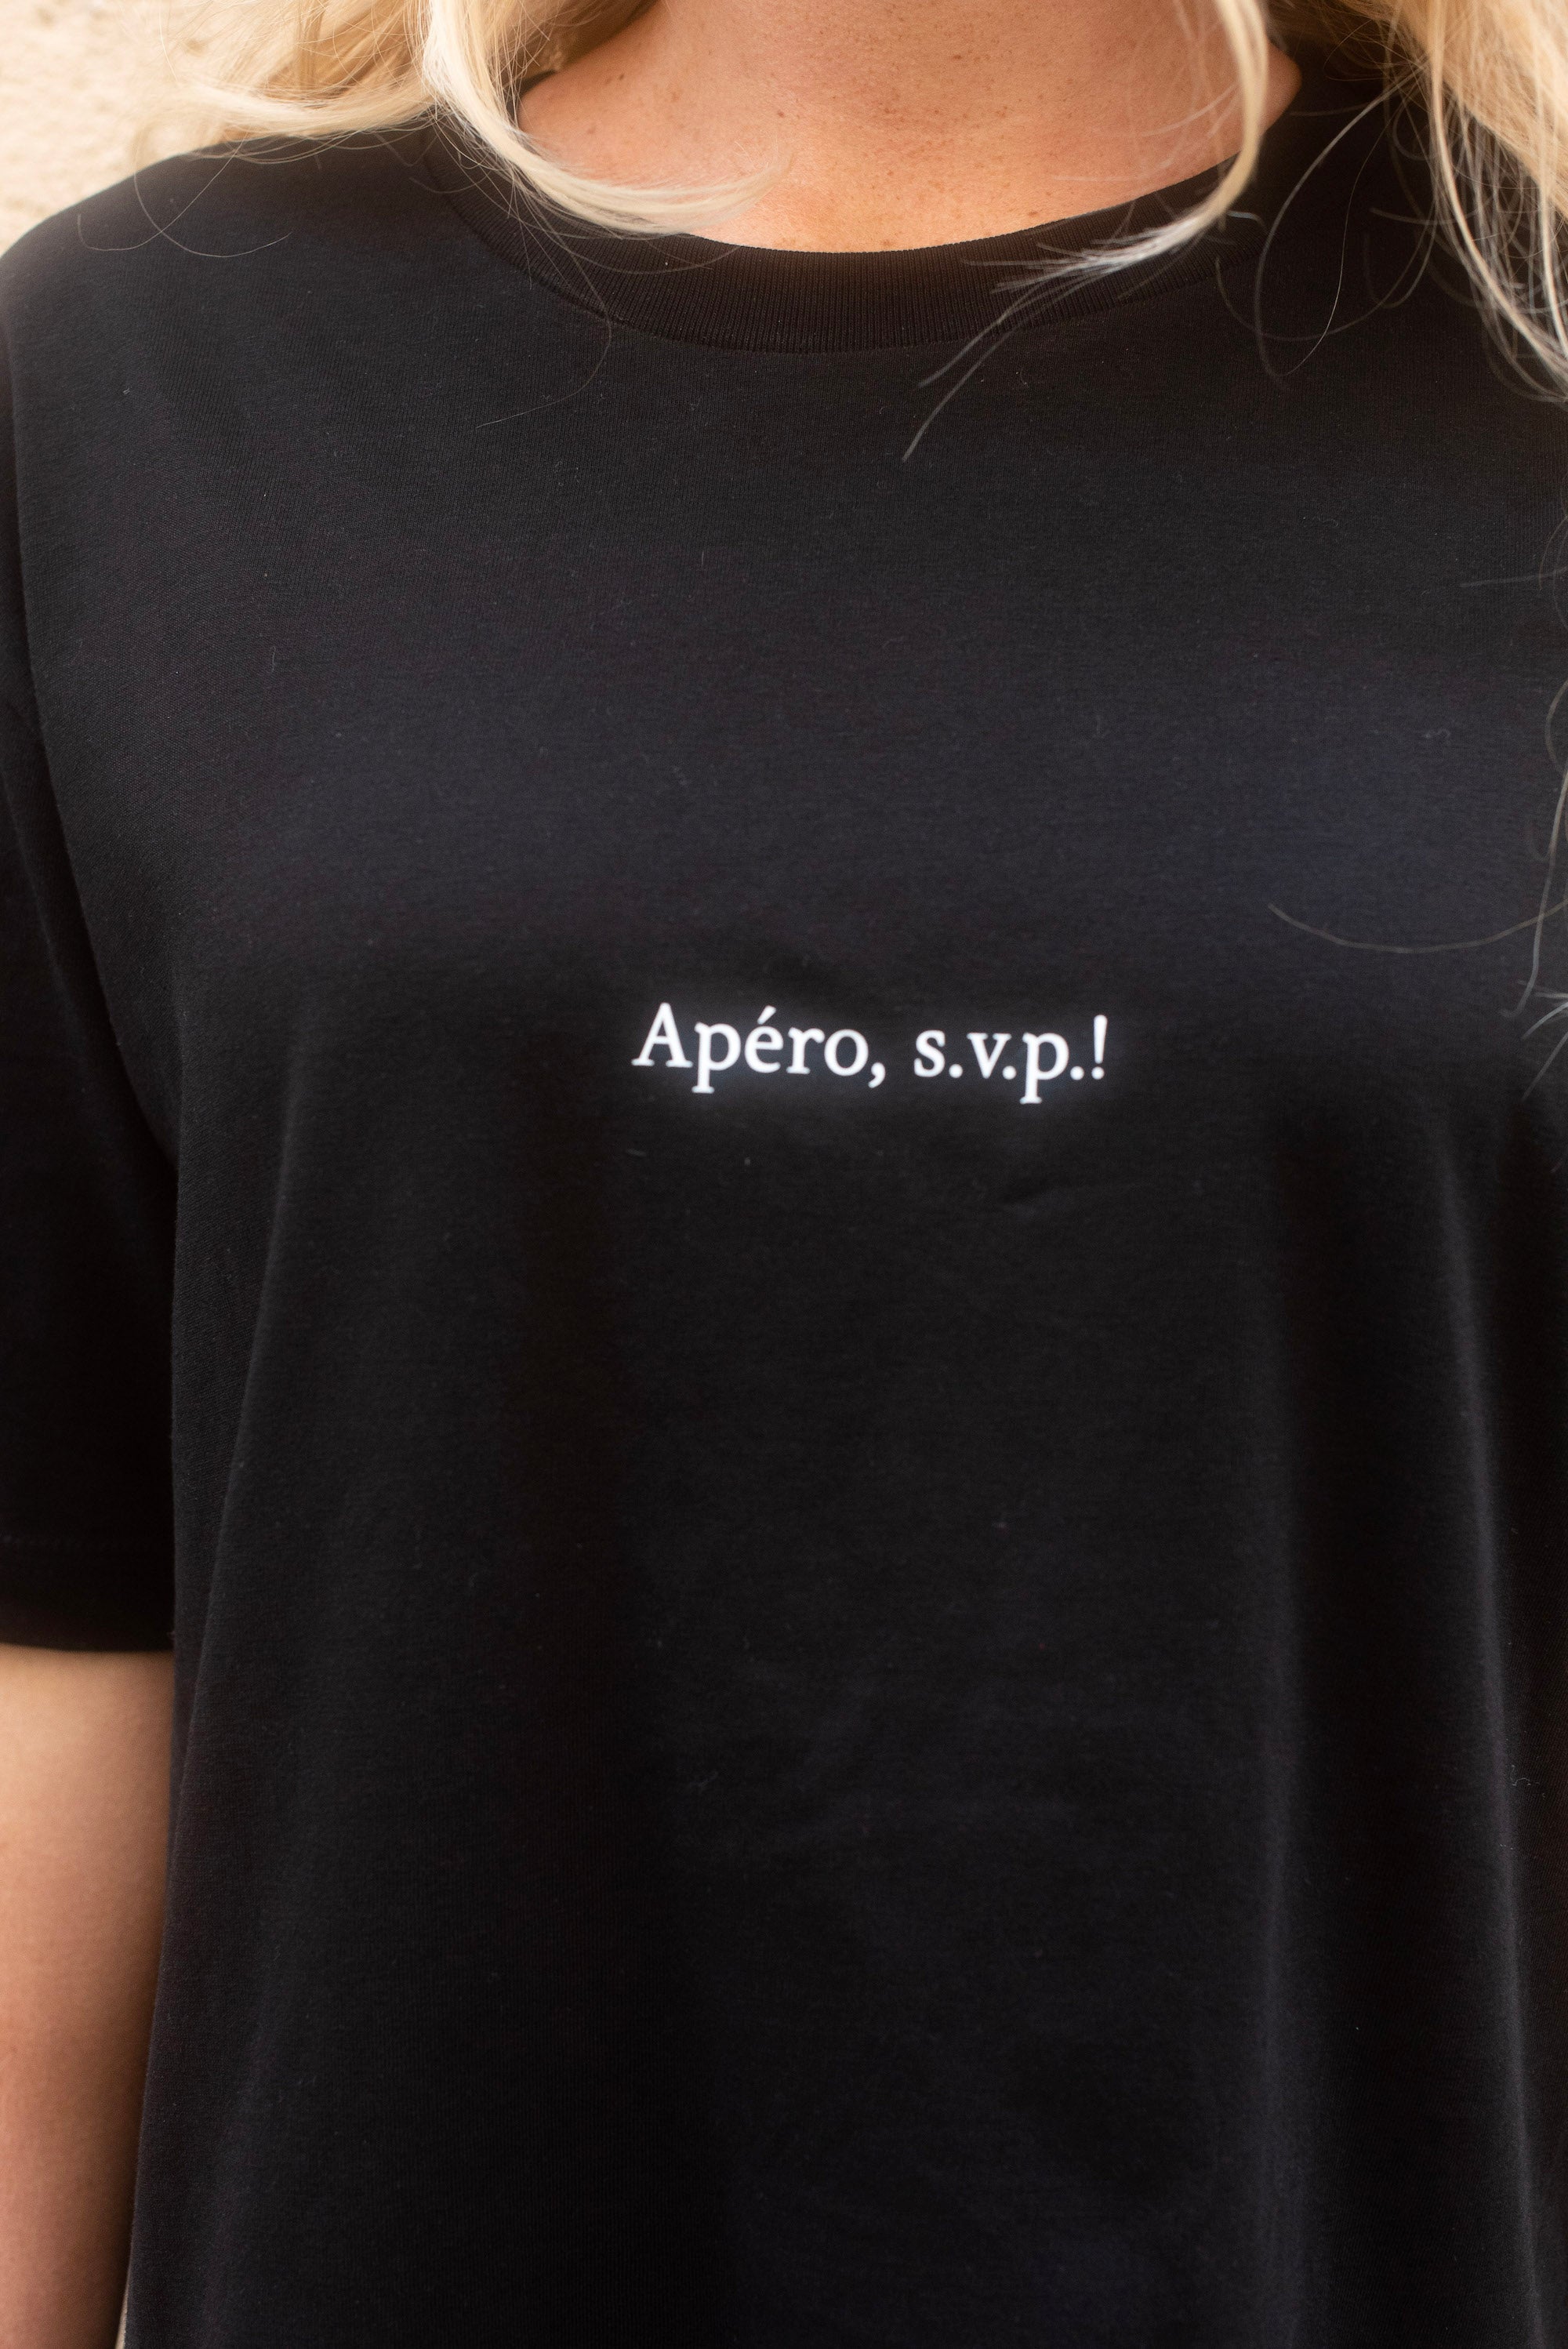 Apéro s.v.p. T-Shirt - Black/White 